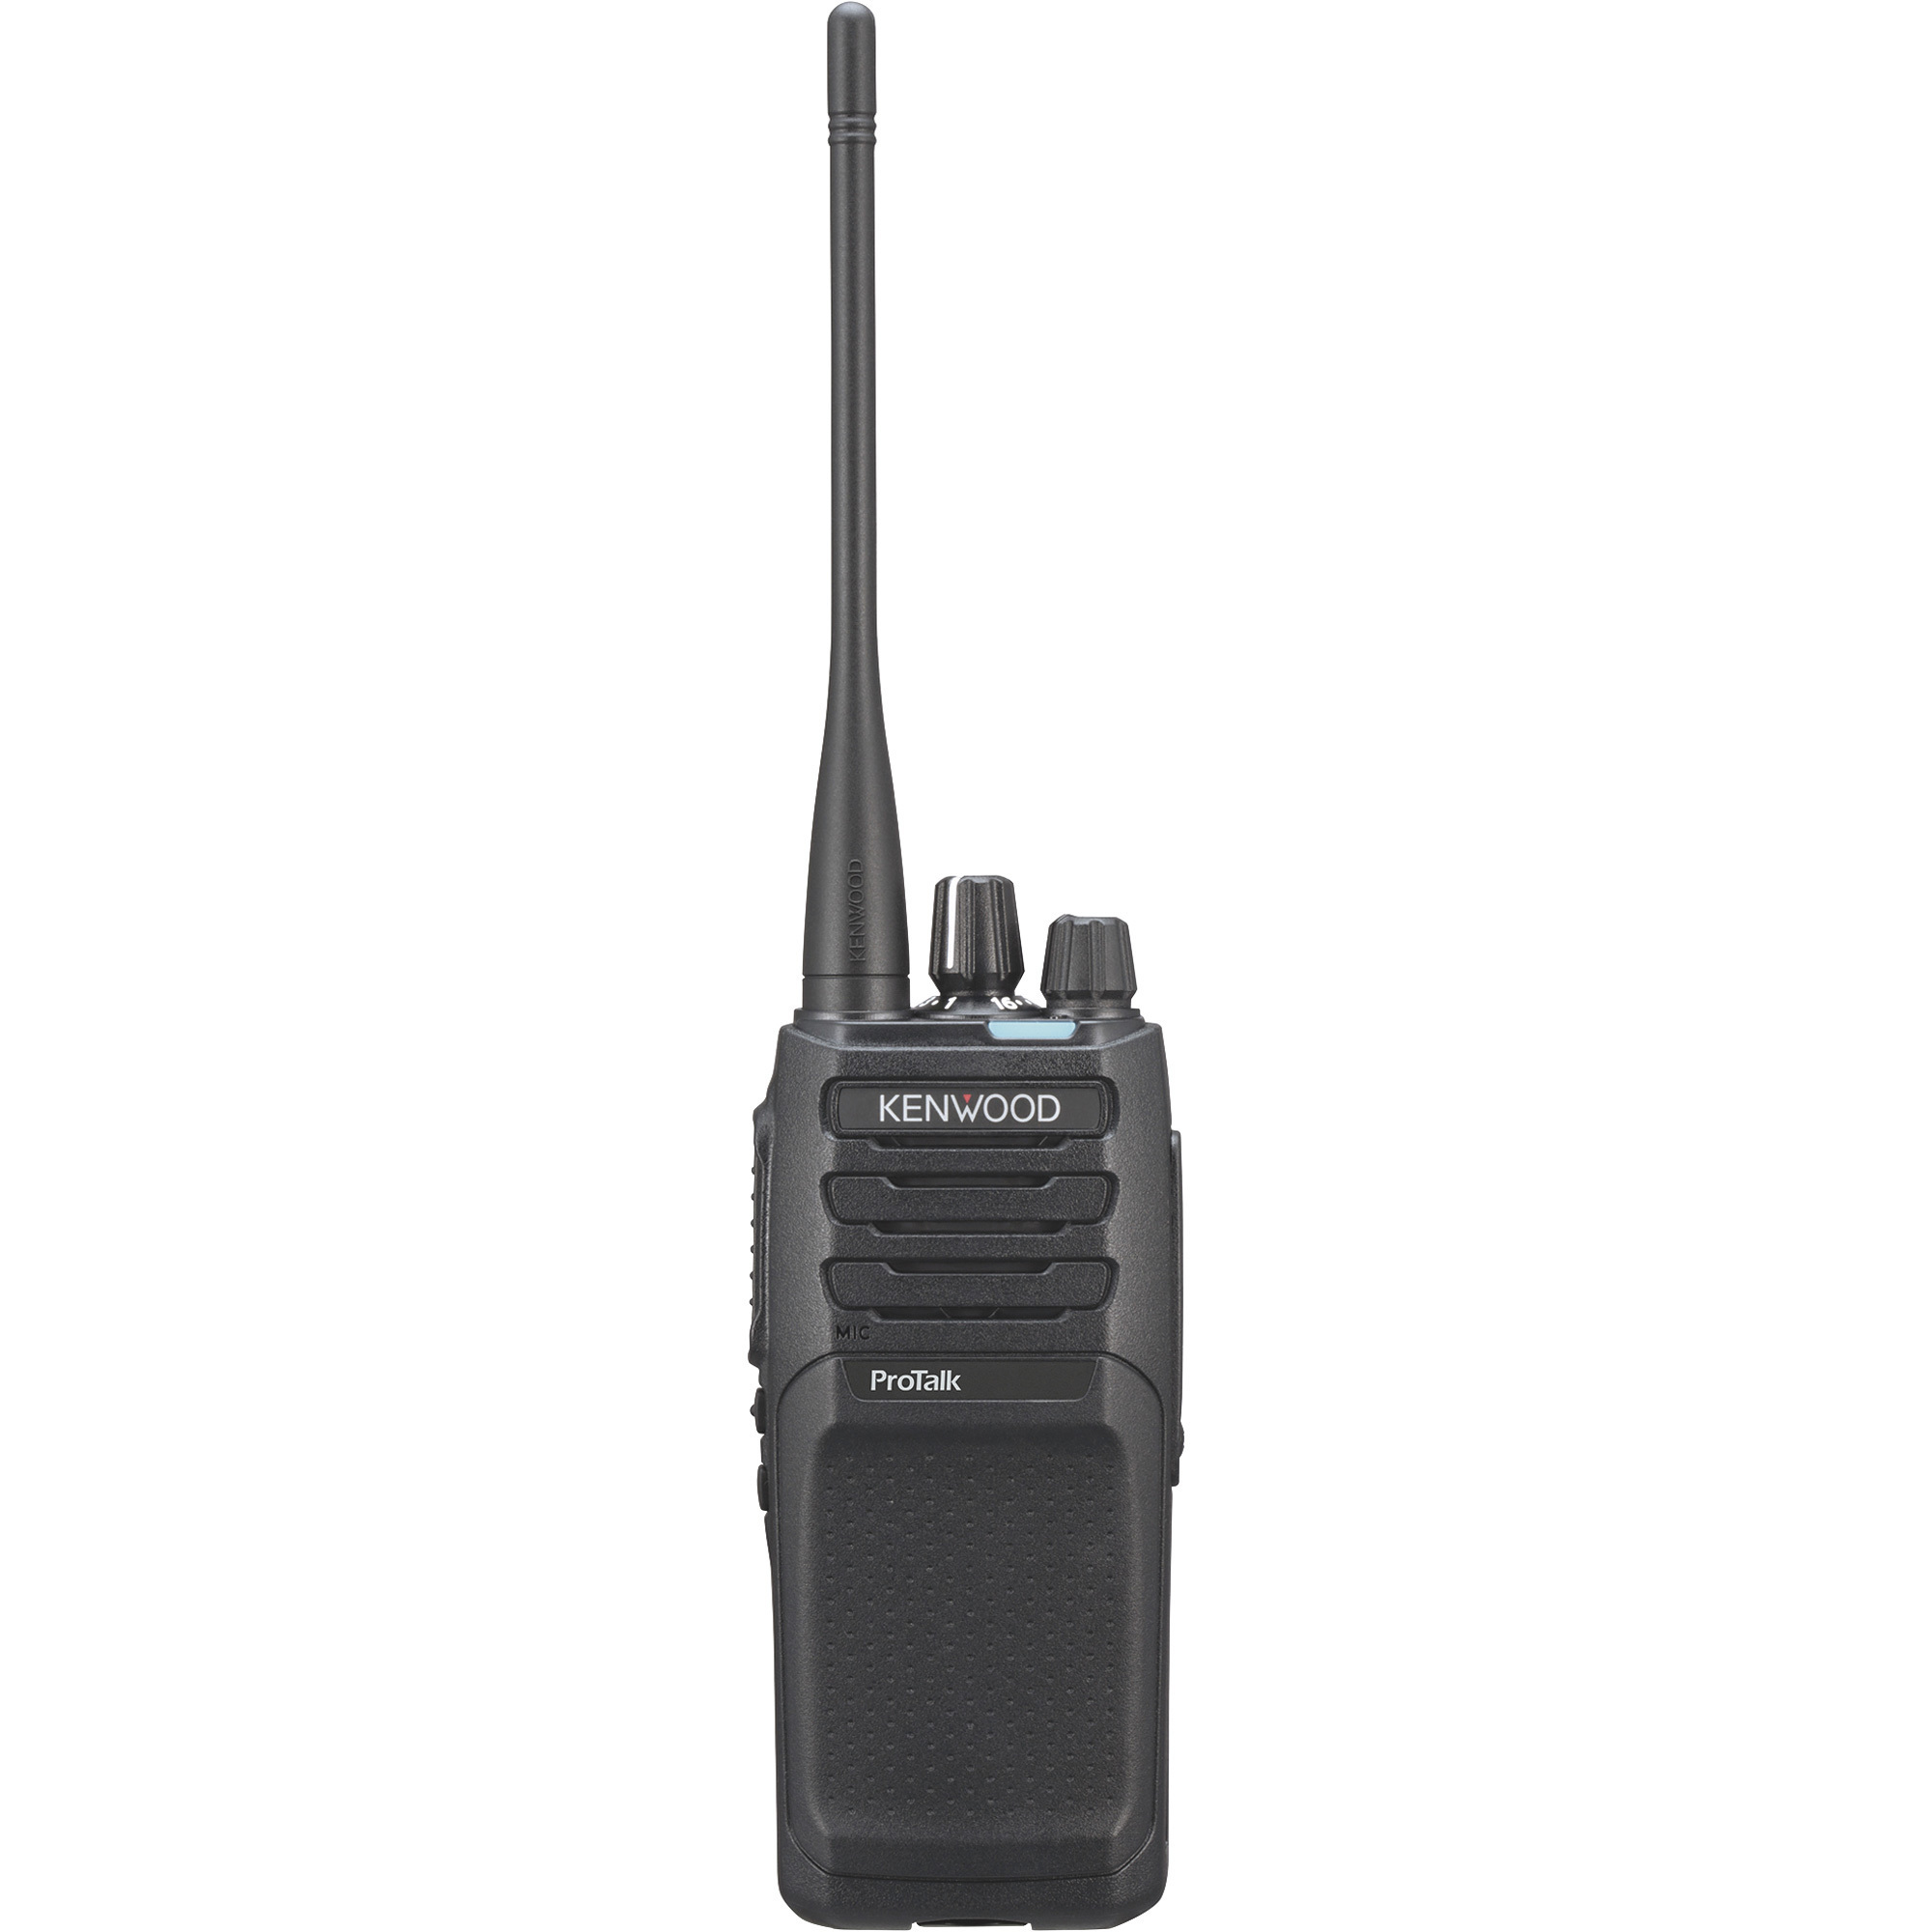 Kenwood ProTalk UHF Handheld Radio â Model NX-P1300AUK